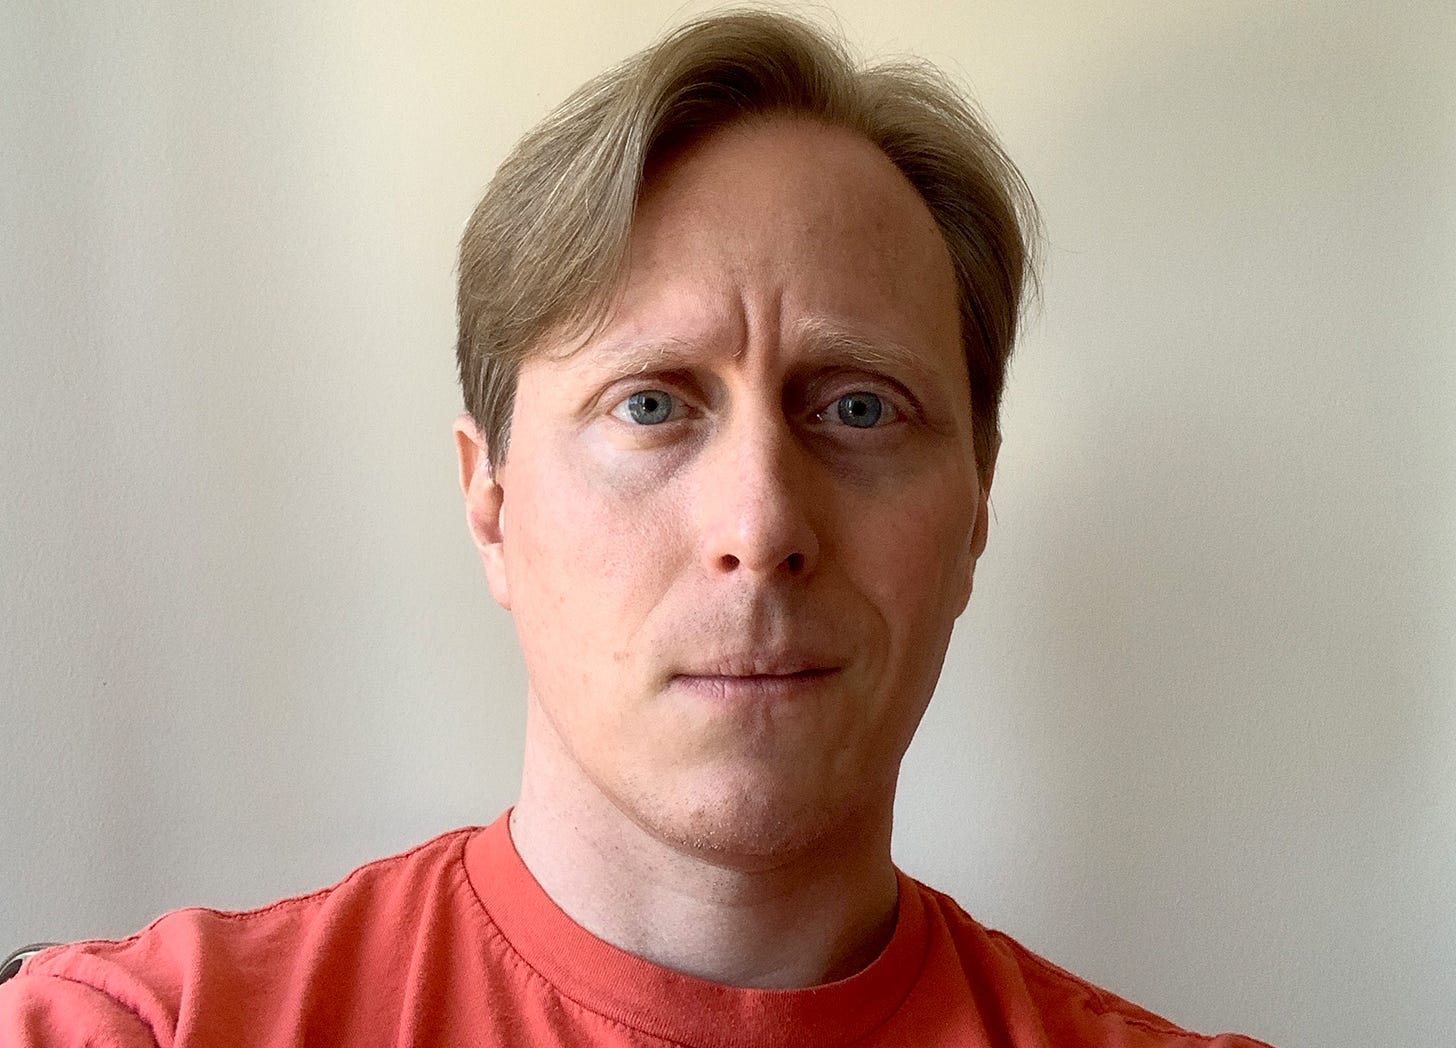 A headshot of journalist Tom Scocca wearing an orange t-shirt